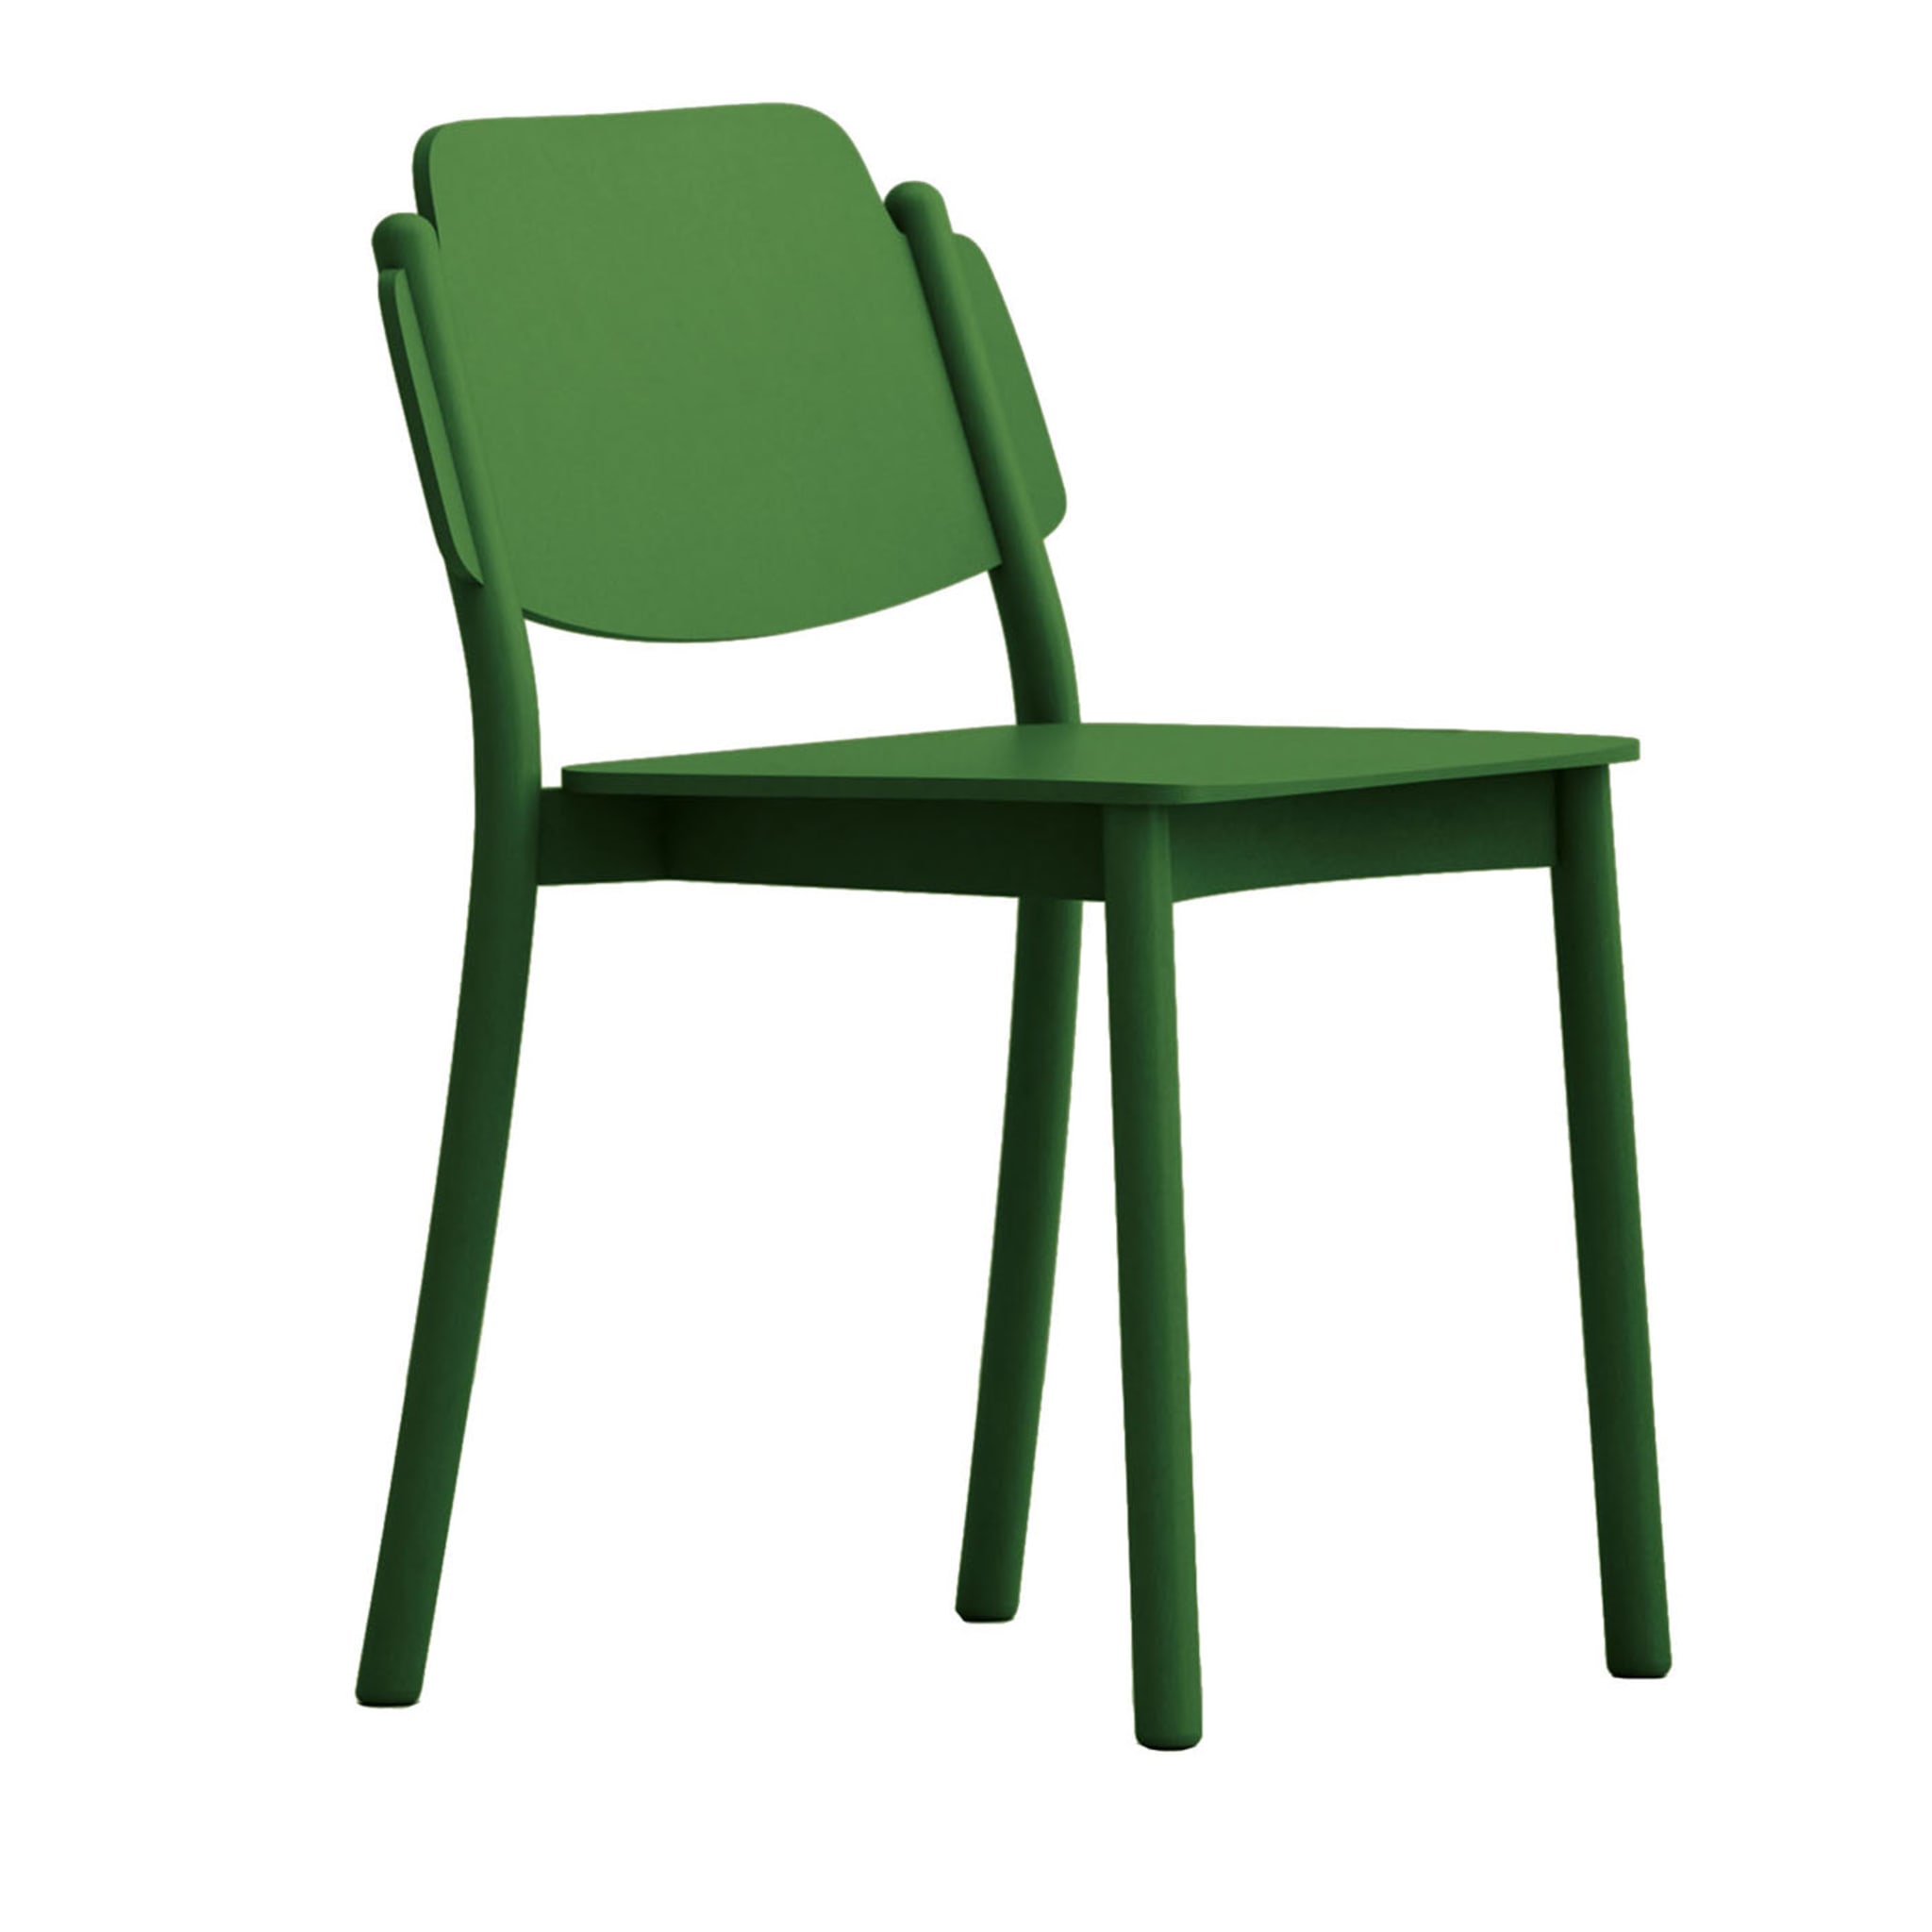 My Chair Green Chair di Emilio Nanni - Vista principale